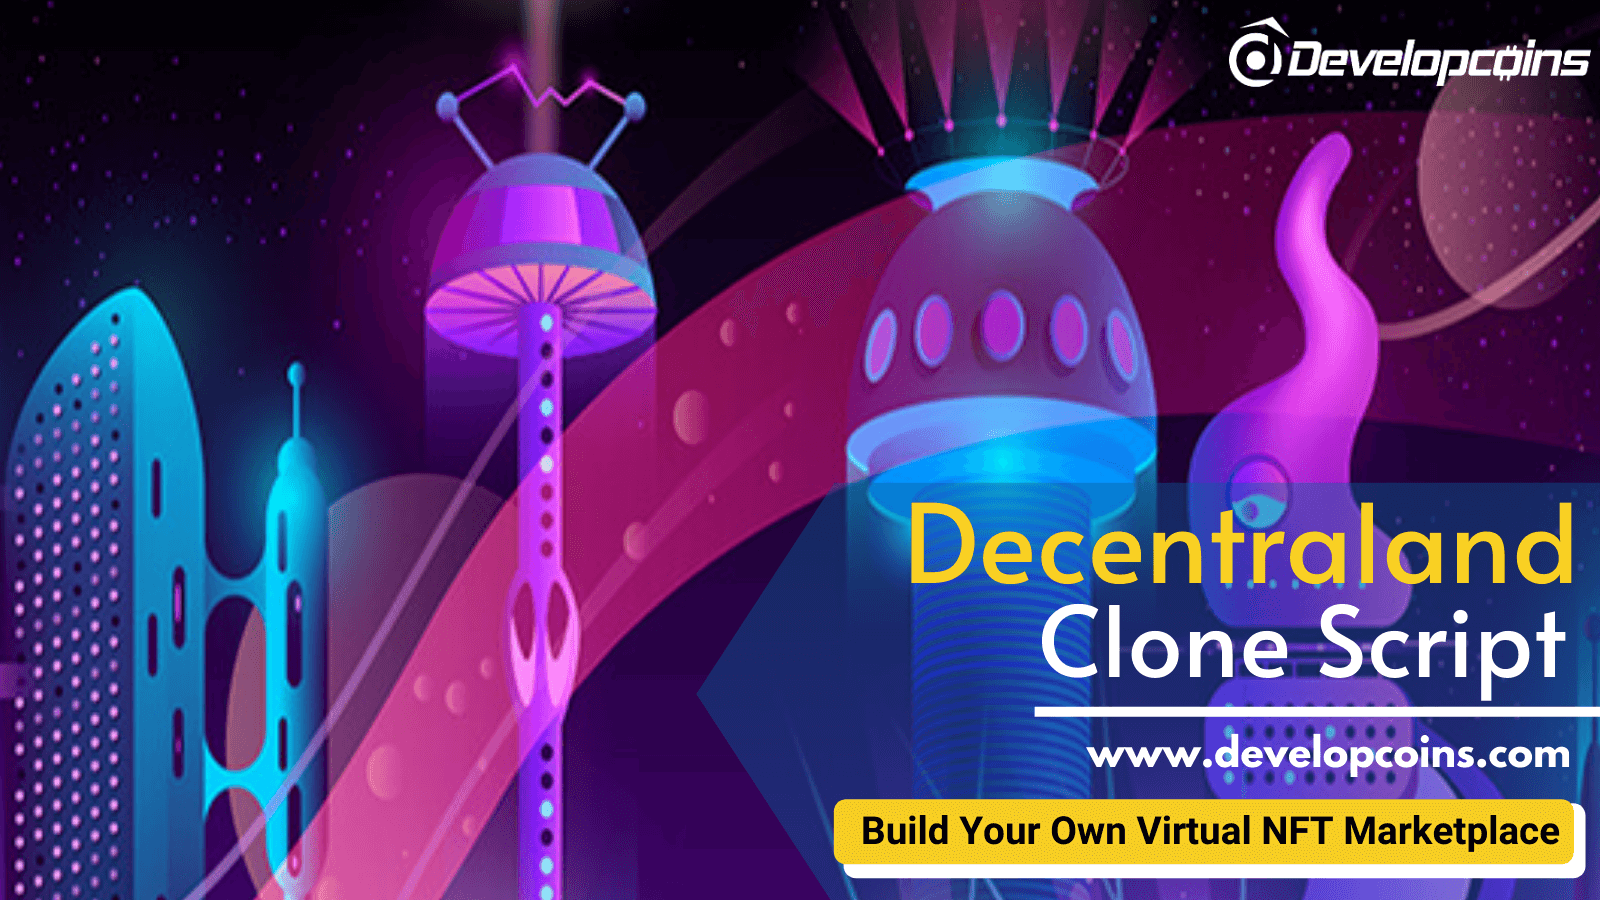 Decentraland Clone Script - To Create Virtual NFT Marketplace like Decentraland.